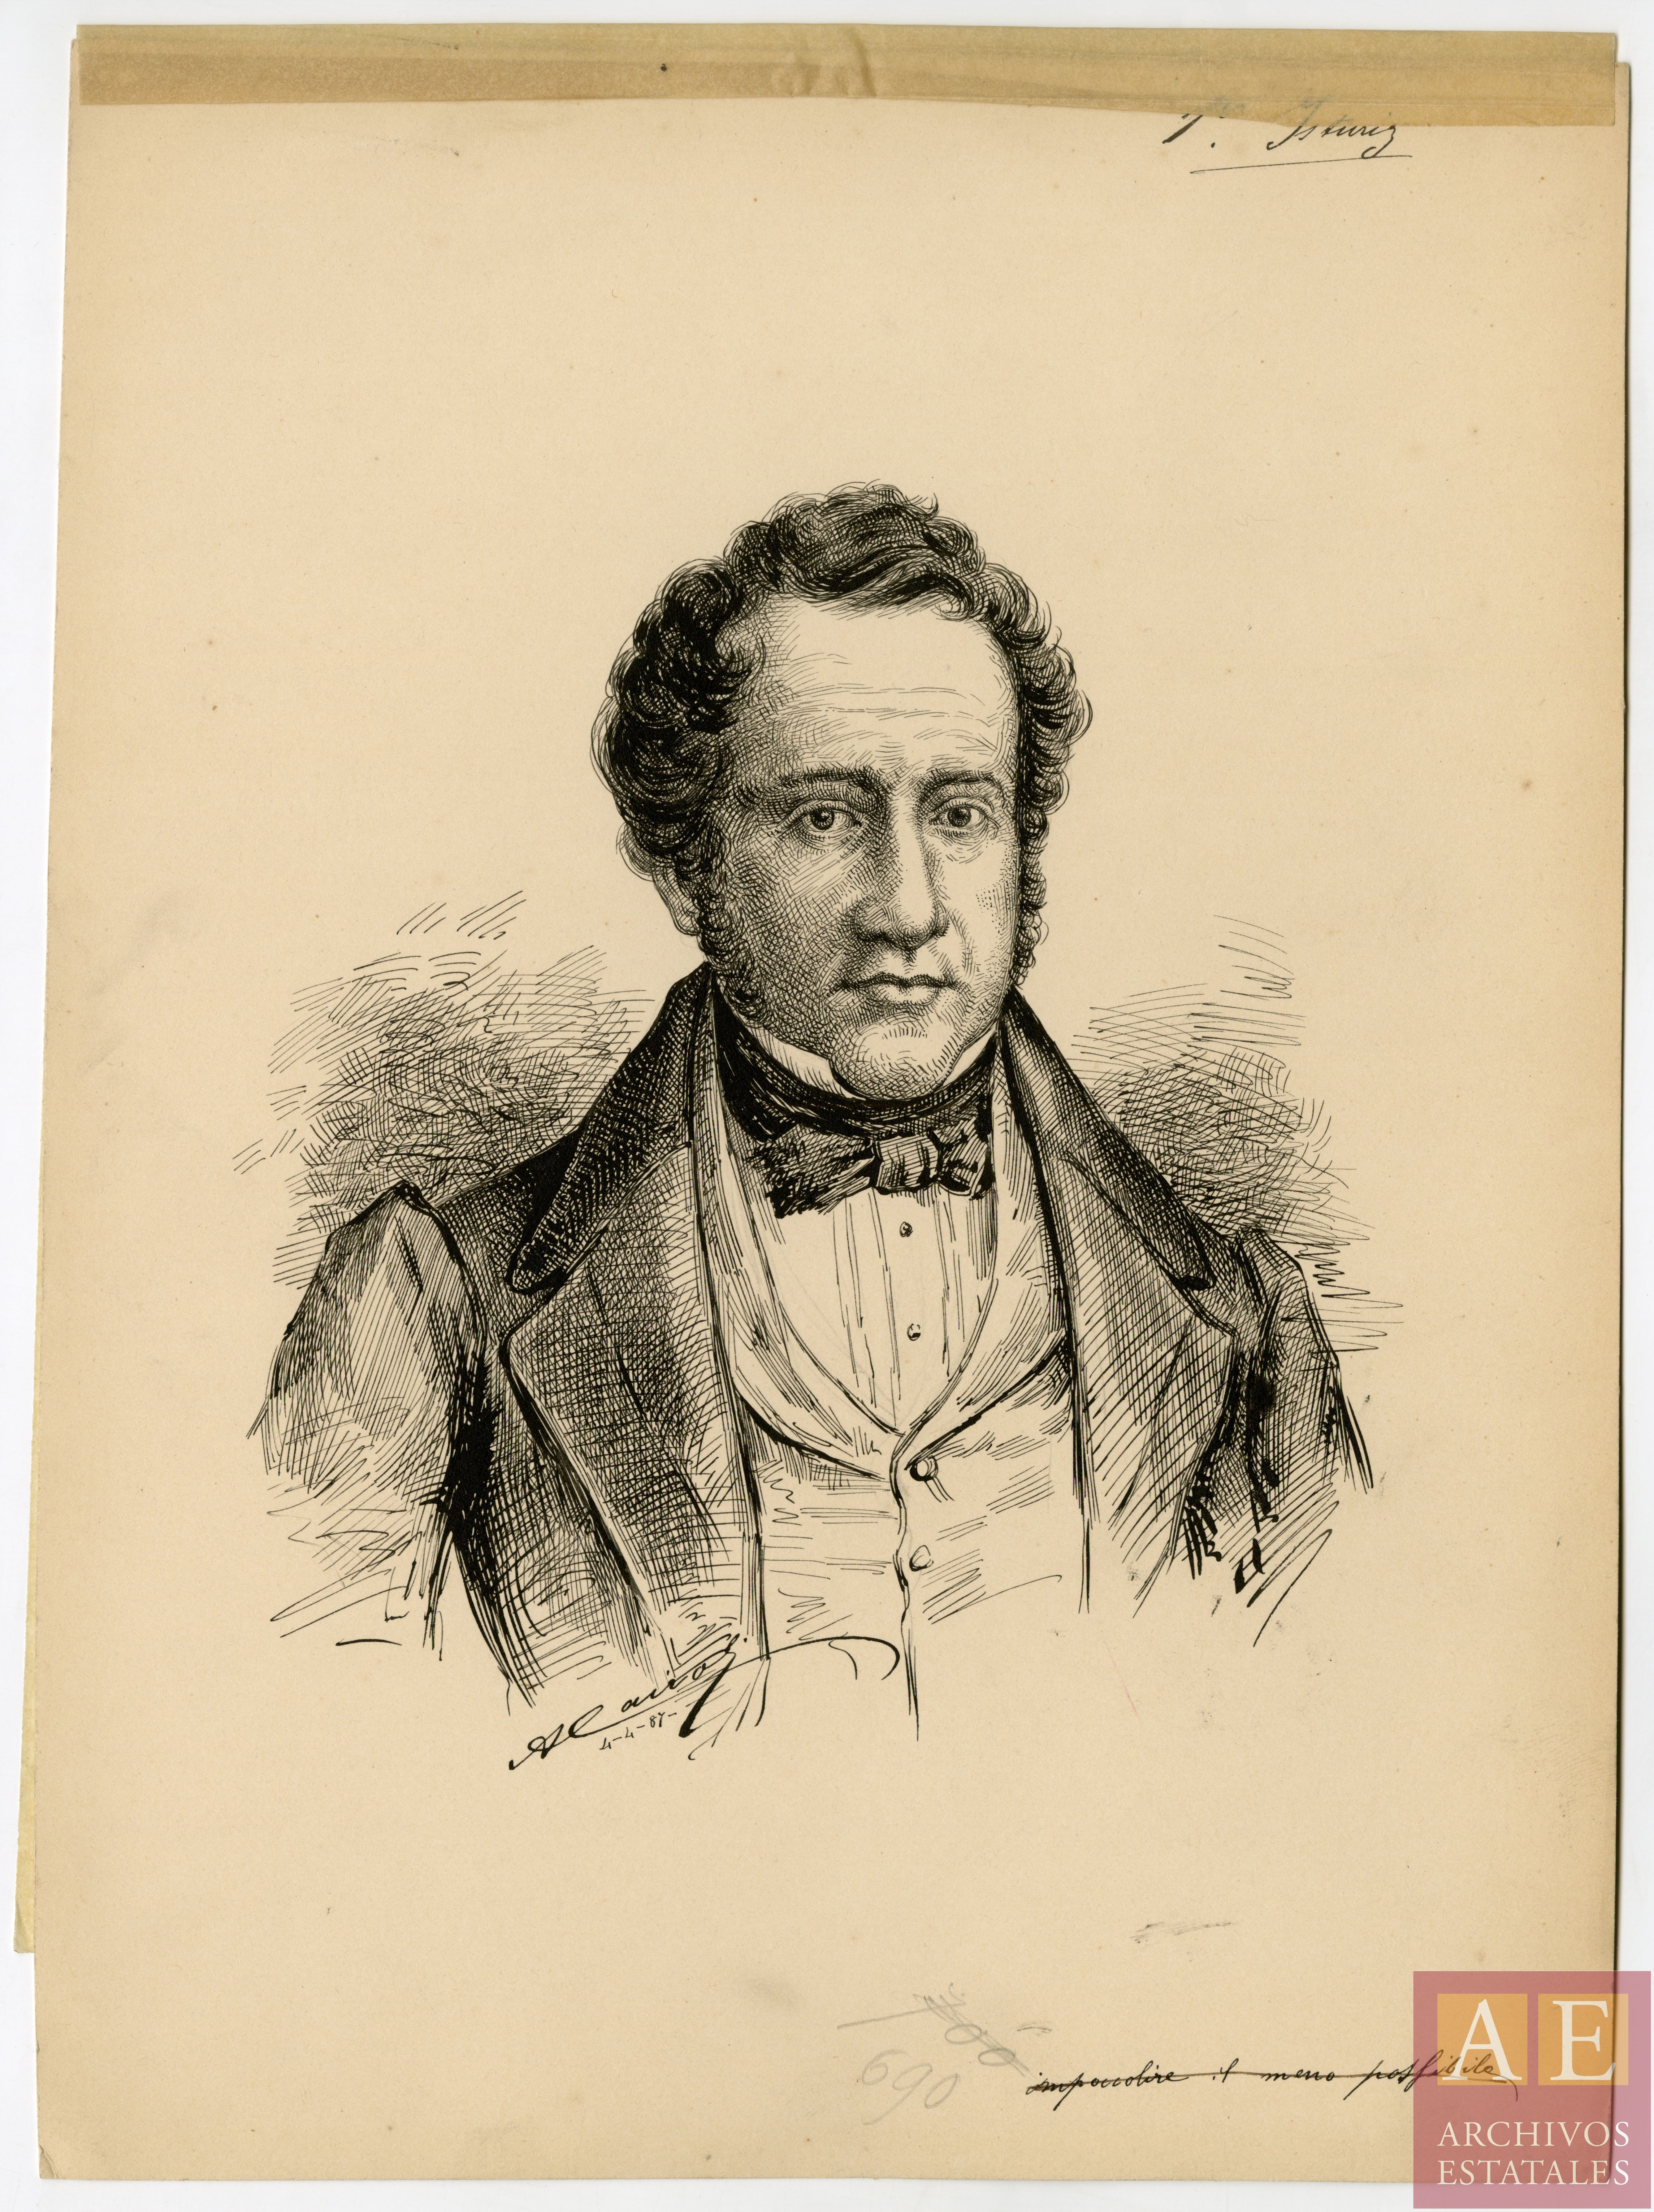 Isturiz Montero, Francisco Javier de (1790-1871)